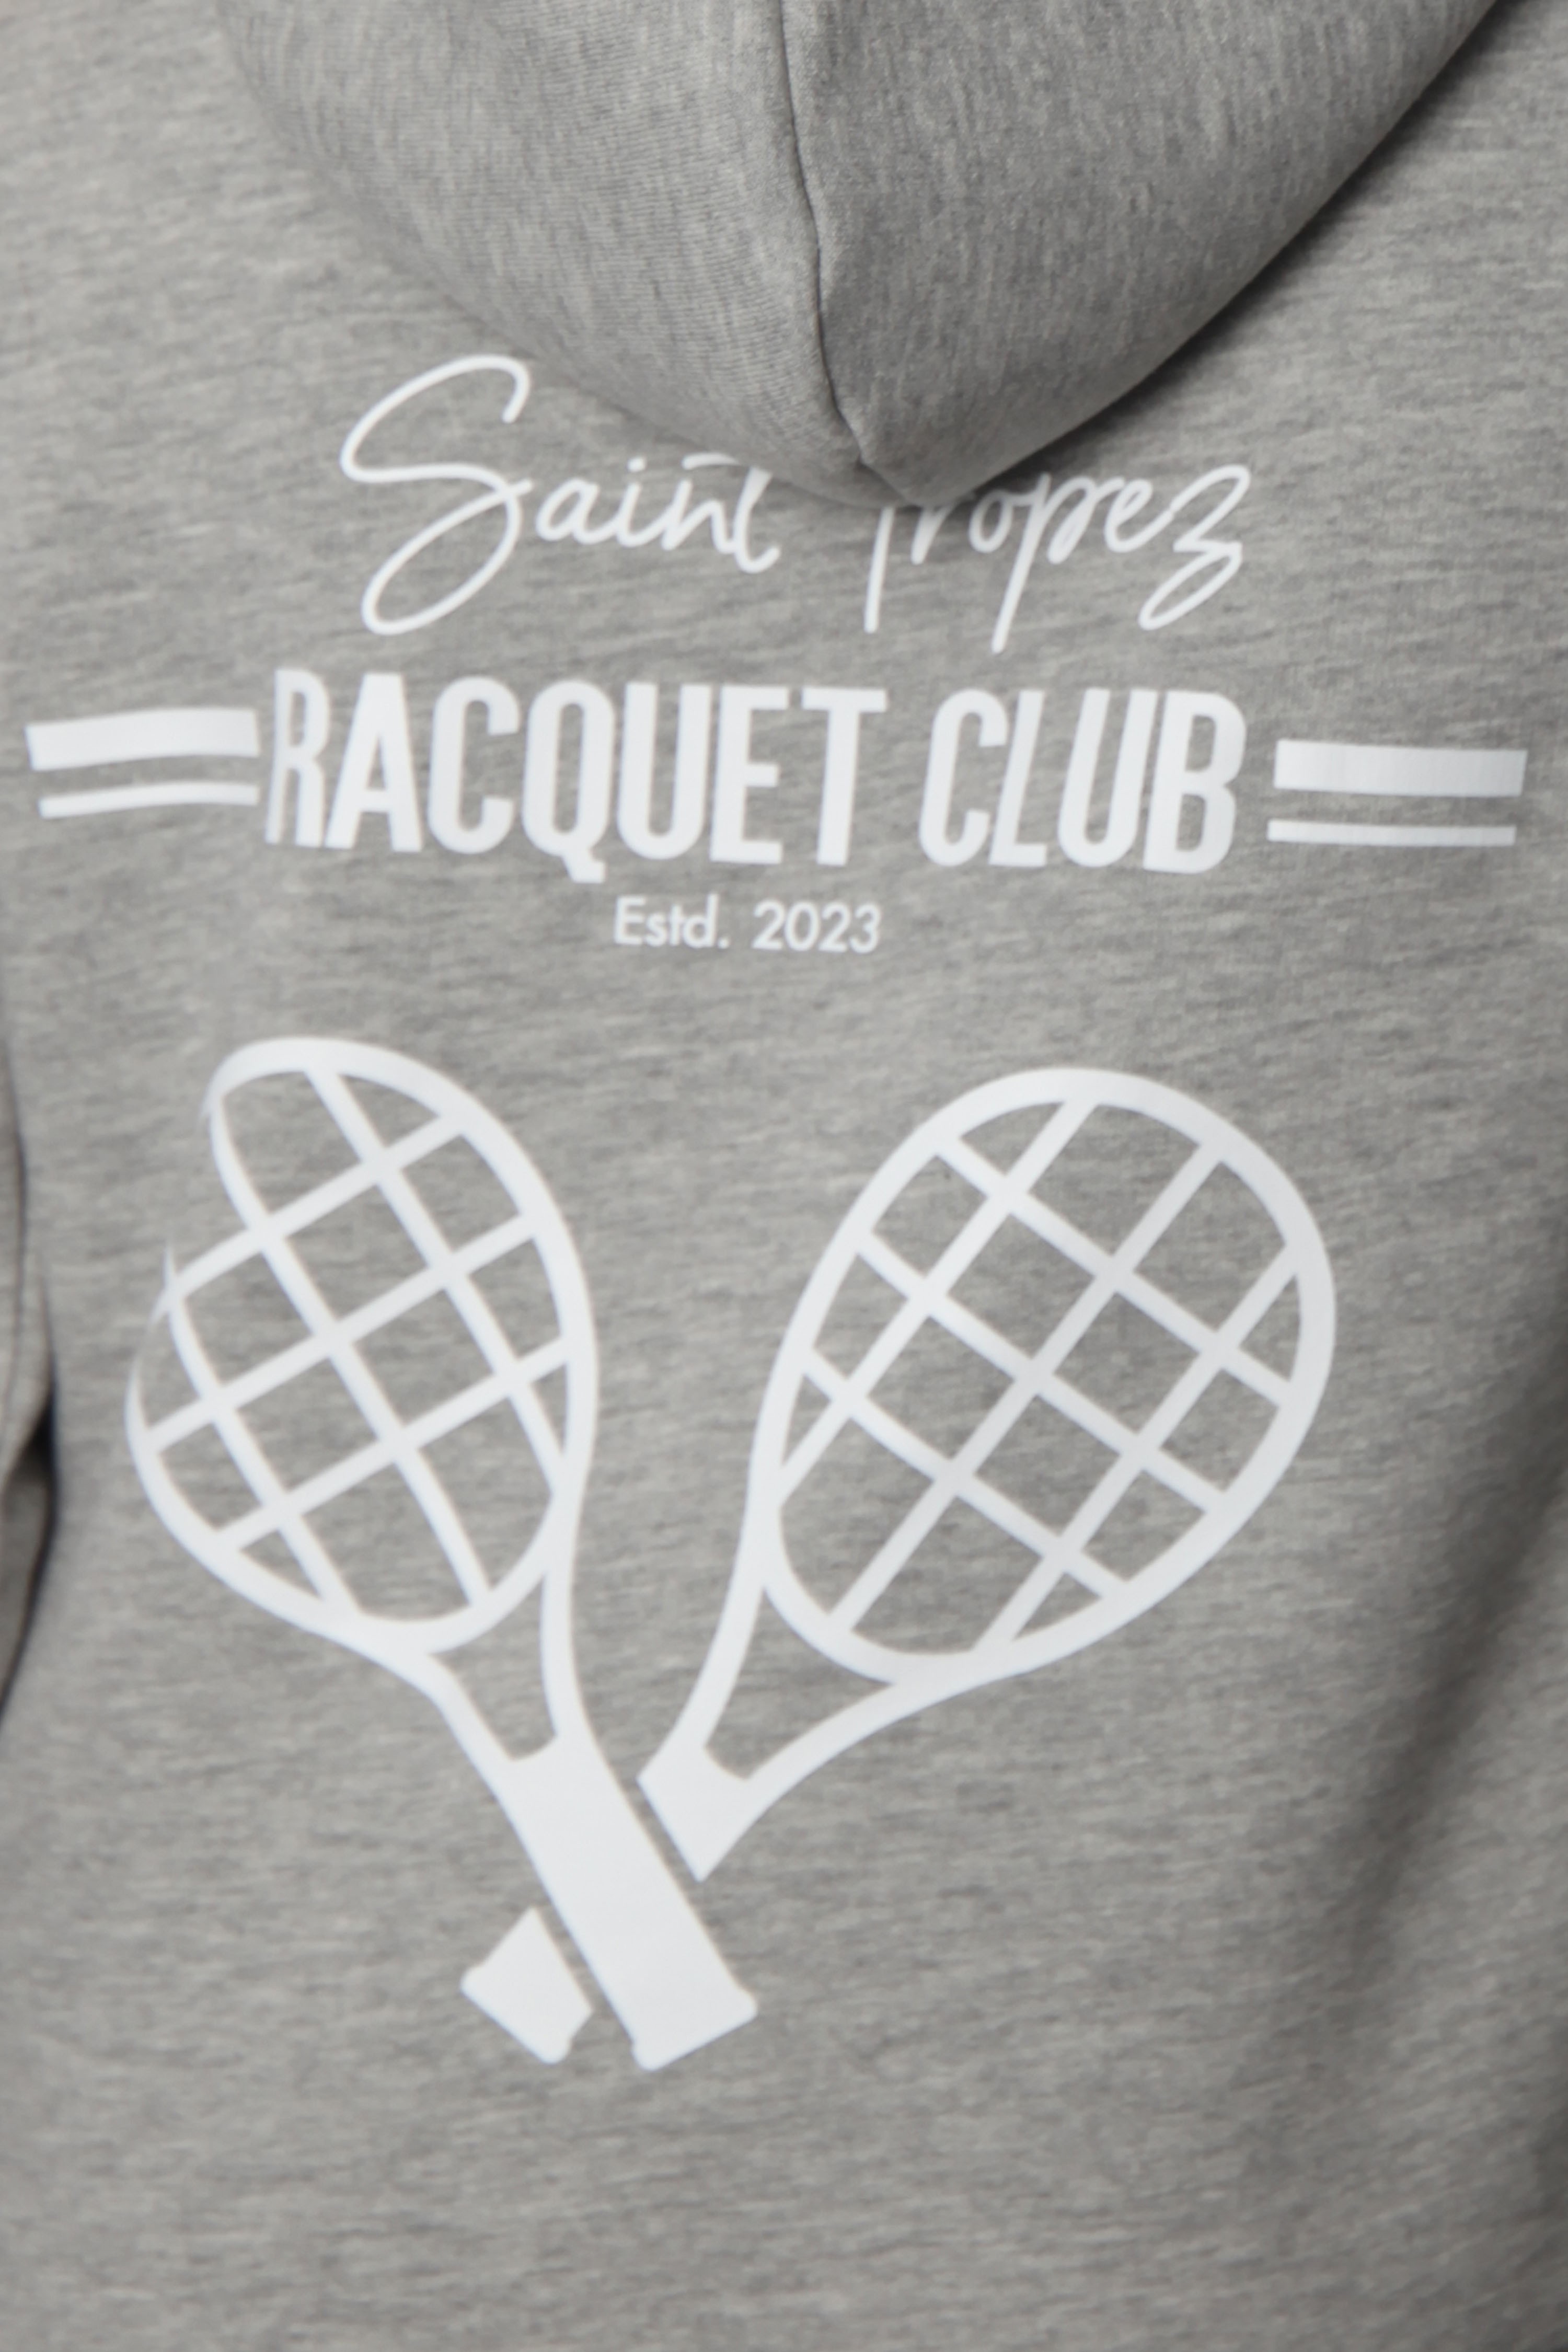 Racquet Club Hoodie Çocuk Kız - Gri